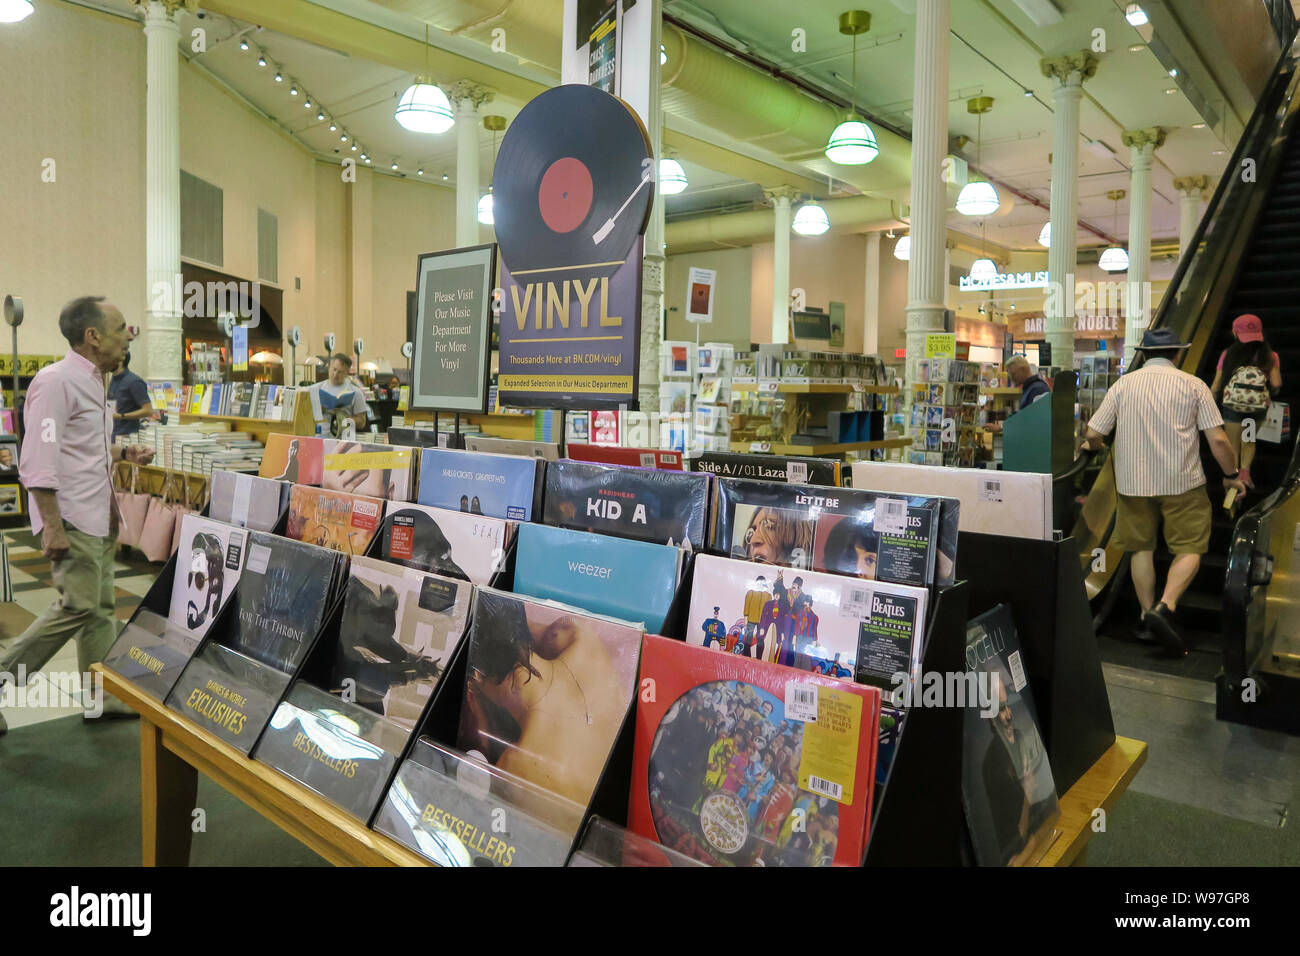 Barnes Noble Booksellers Vinyl Record Display